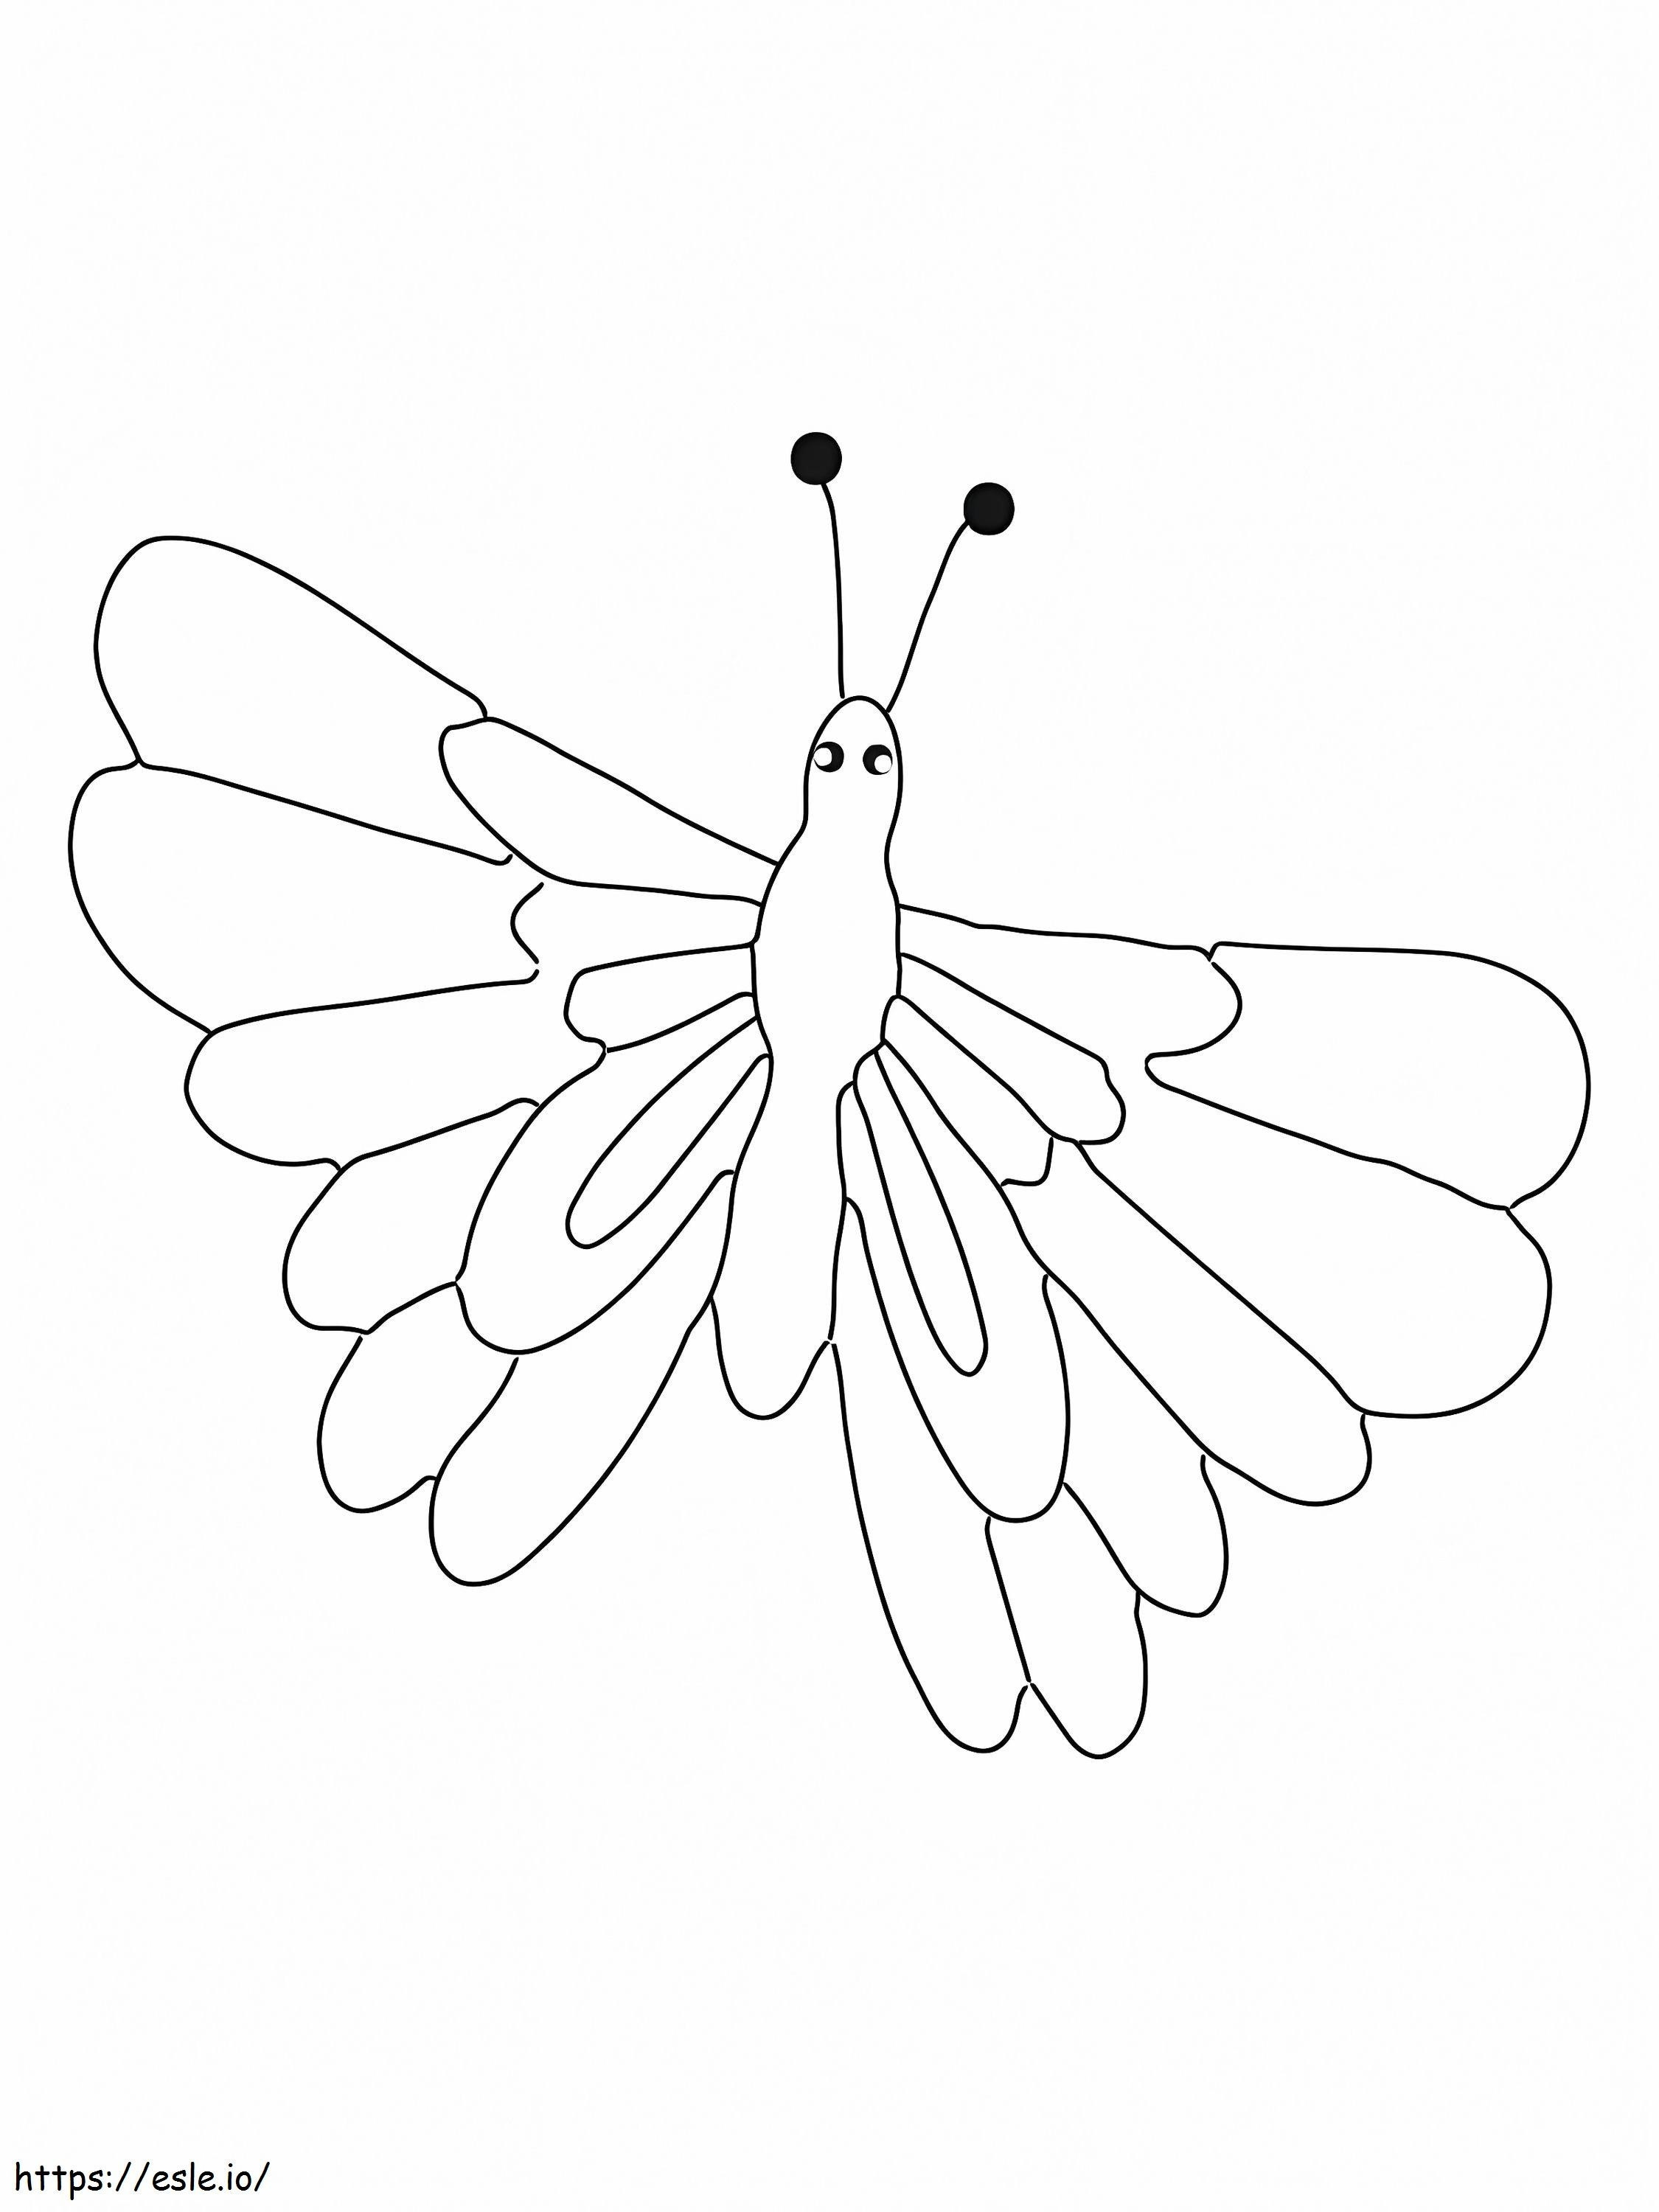 Desenho simples de borboleta para colorir